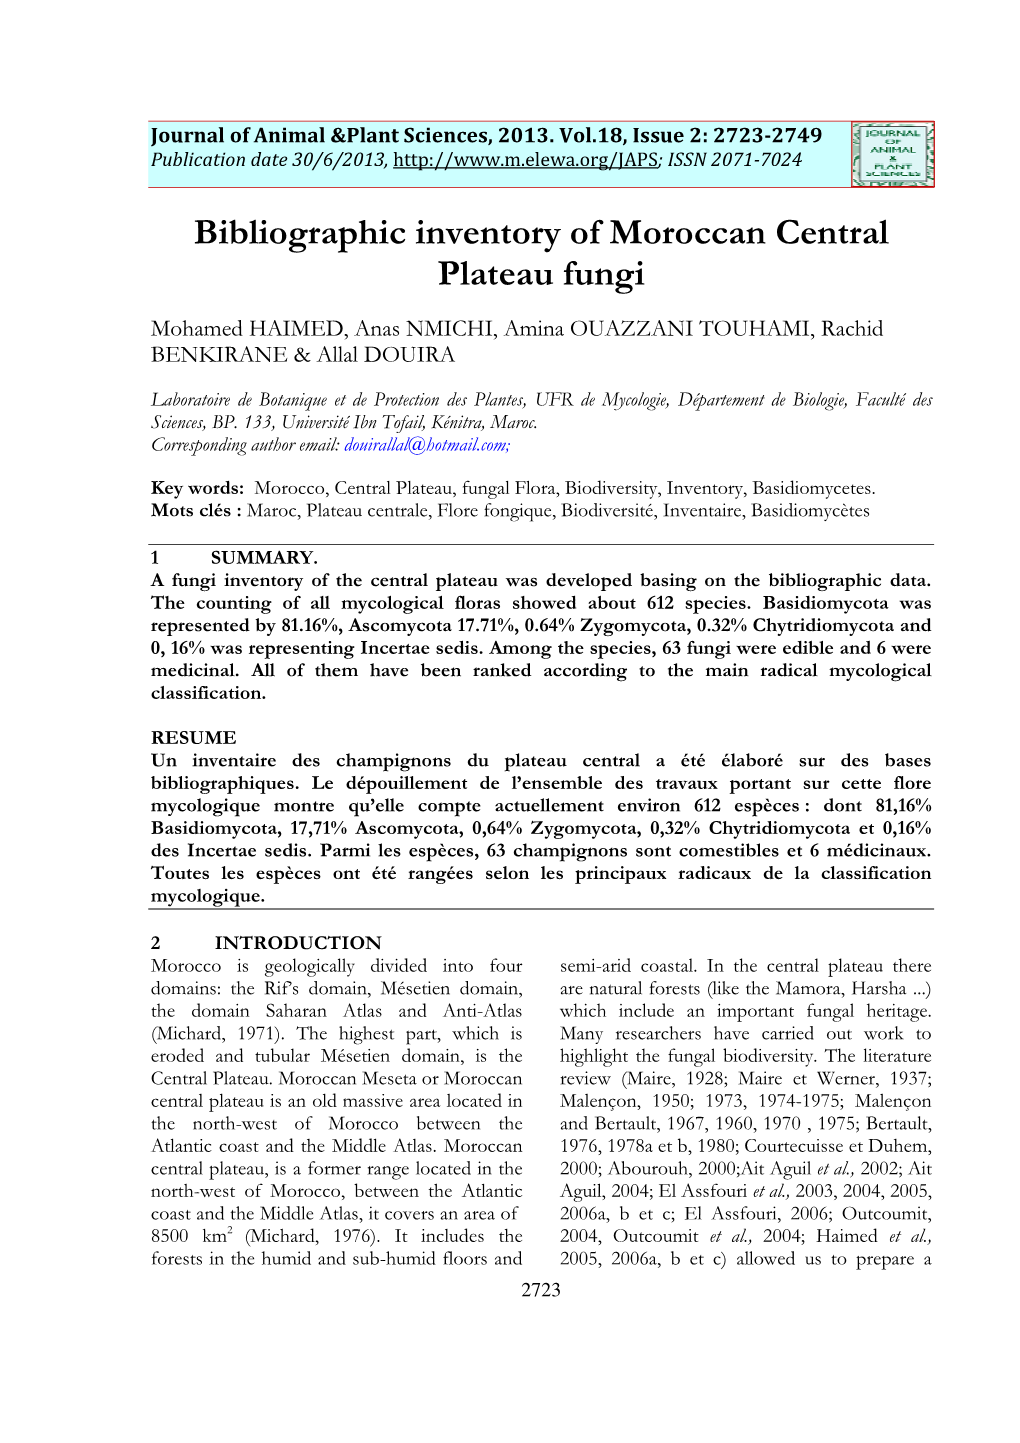 Bibliographic Inventory of Moroccan Central Plateau Fungi